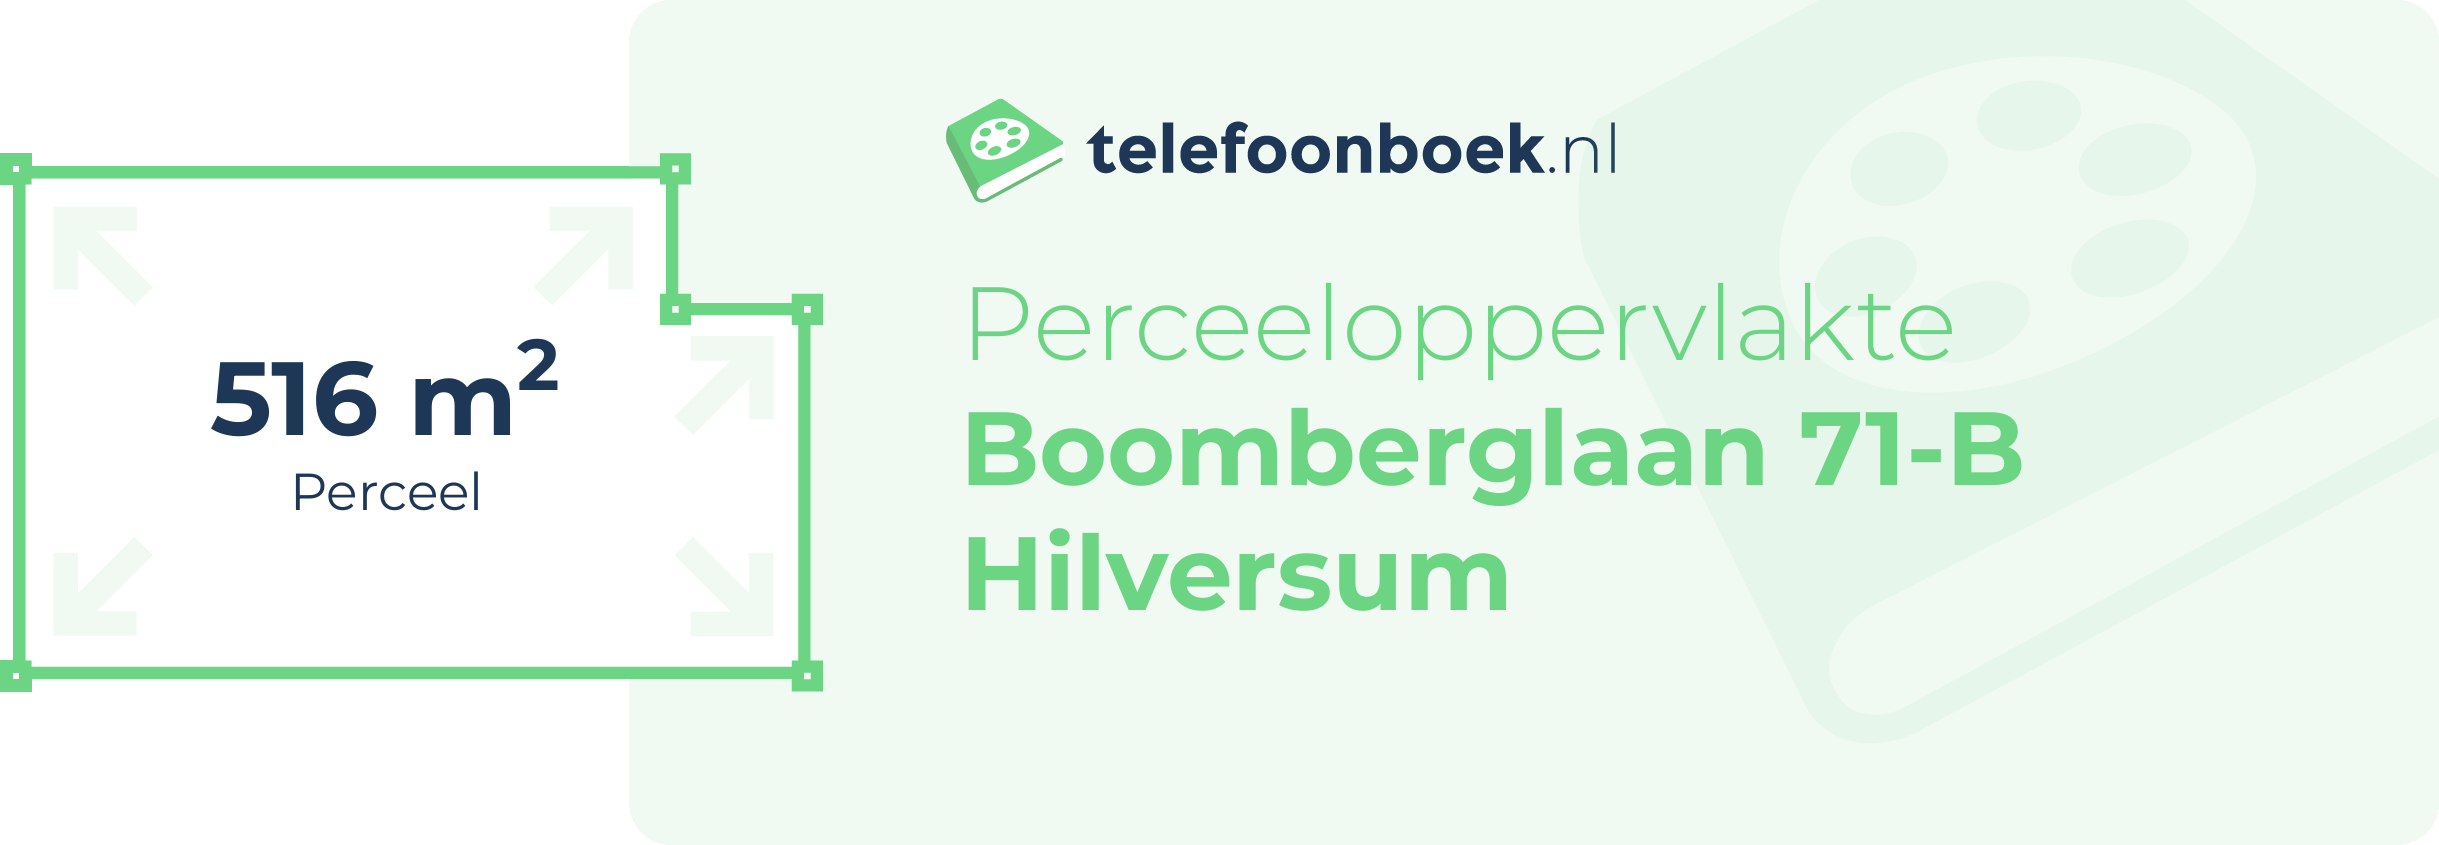 Perceeloppervlakte Boomberglaan 71-B Hilversum